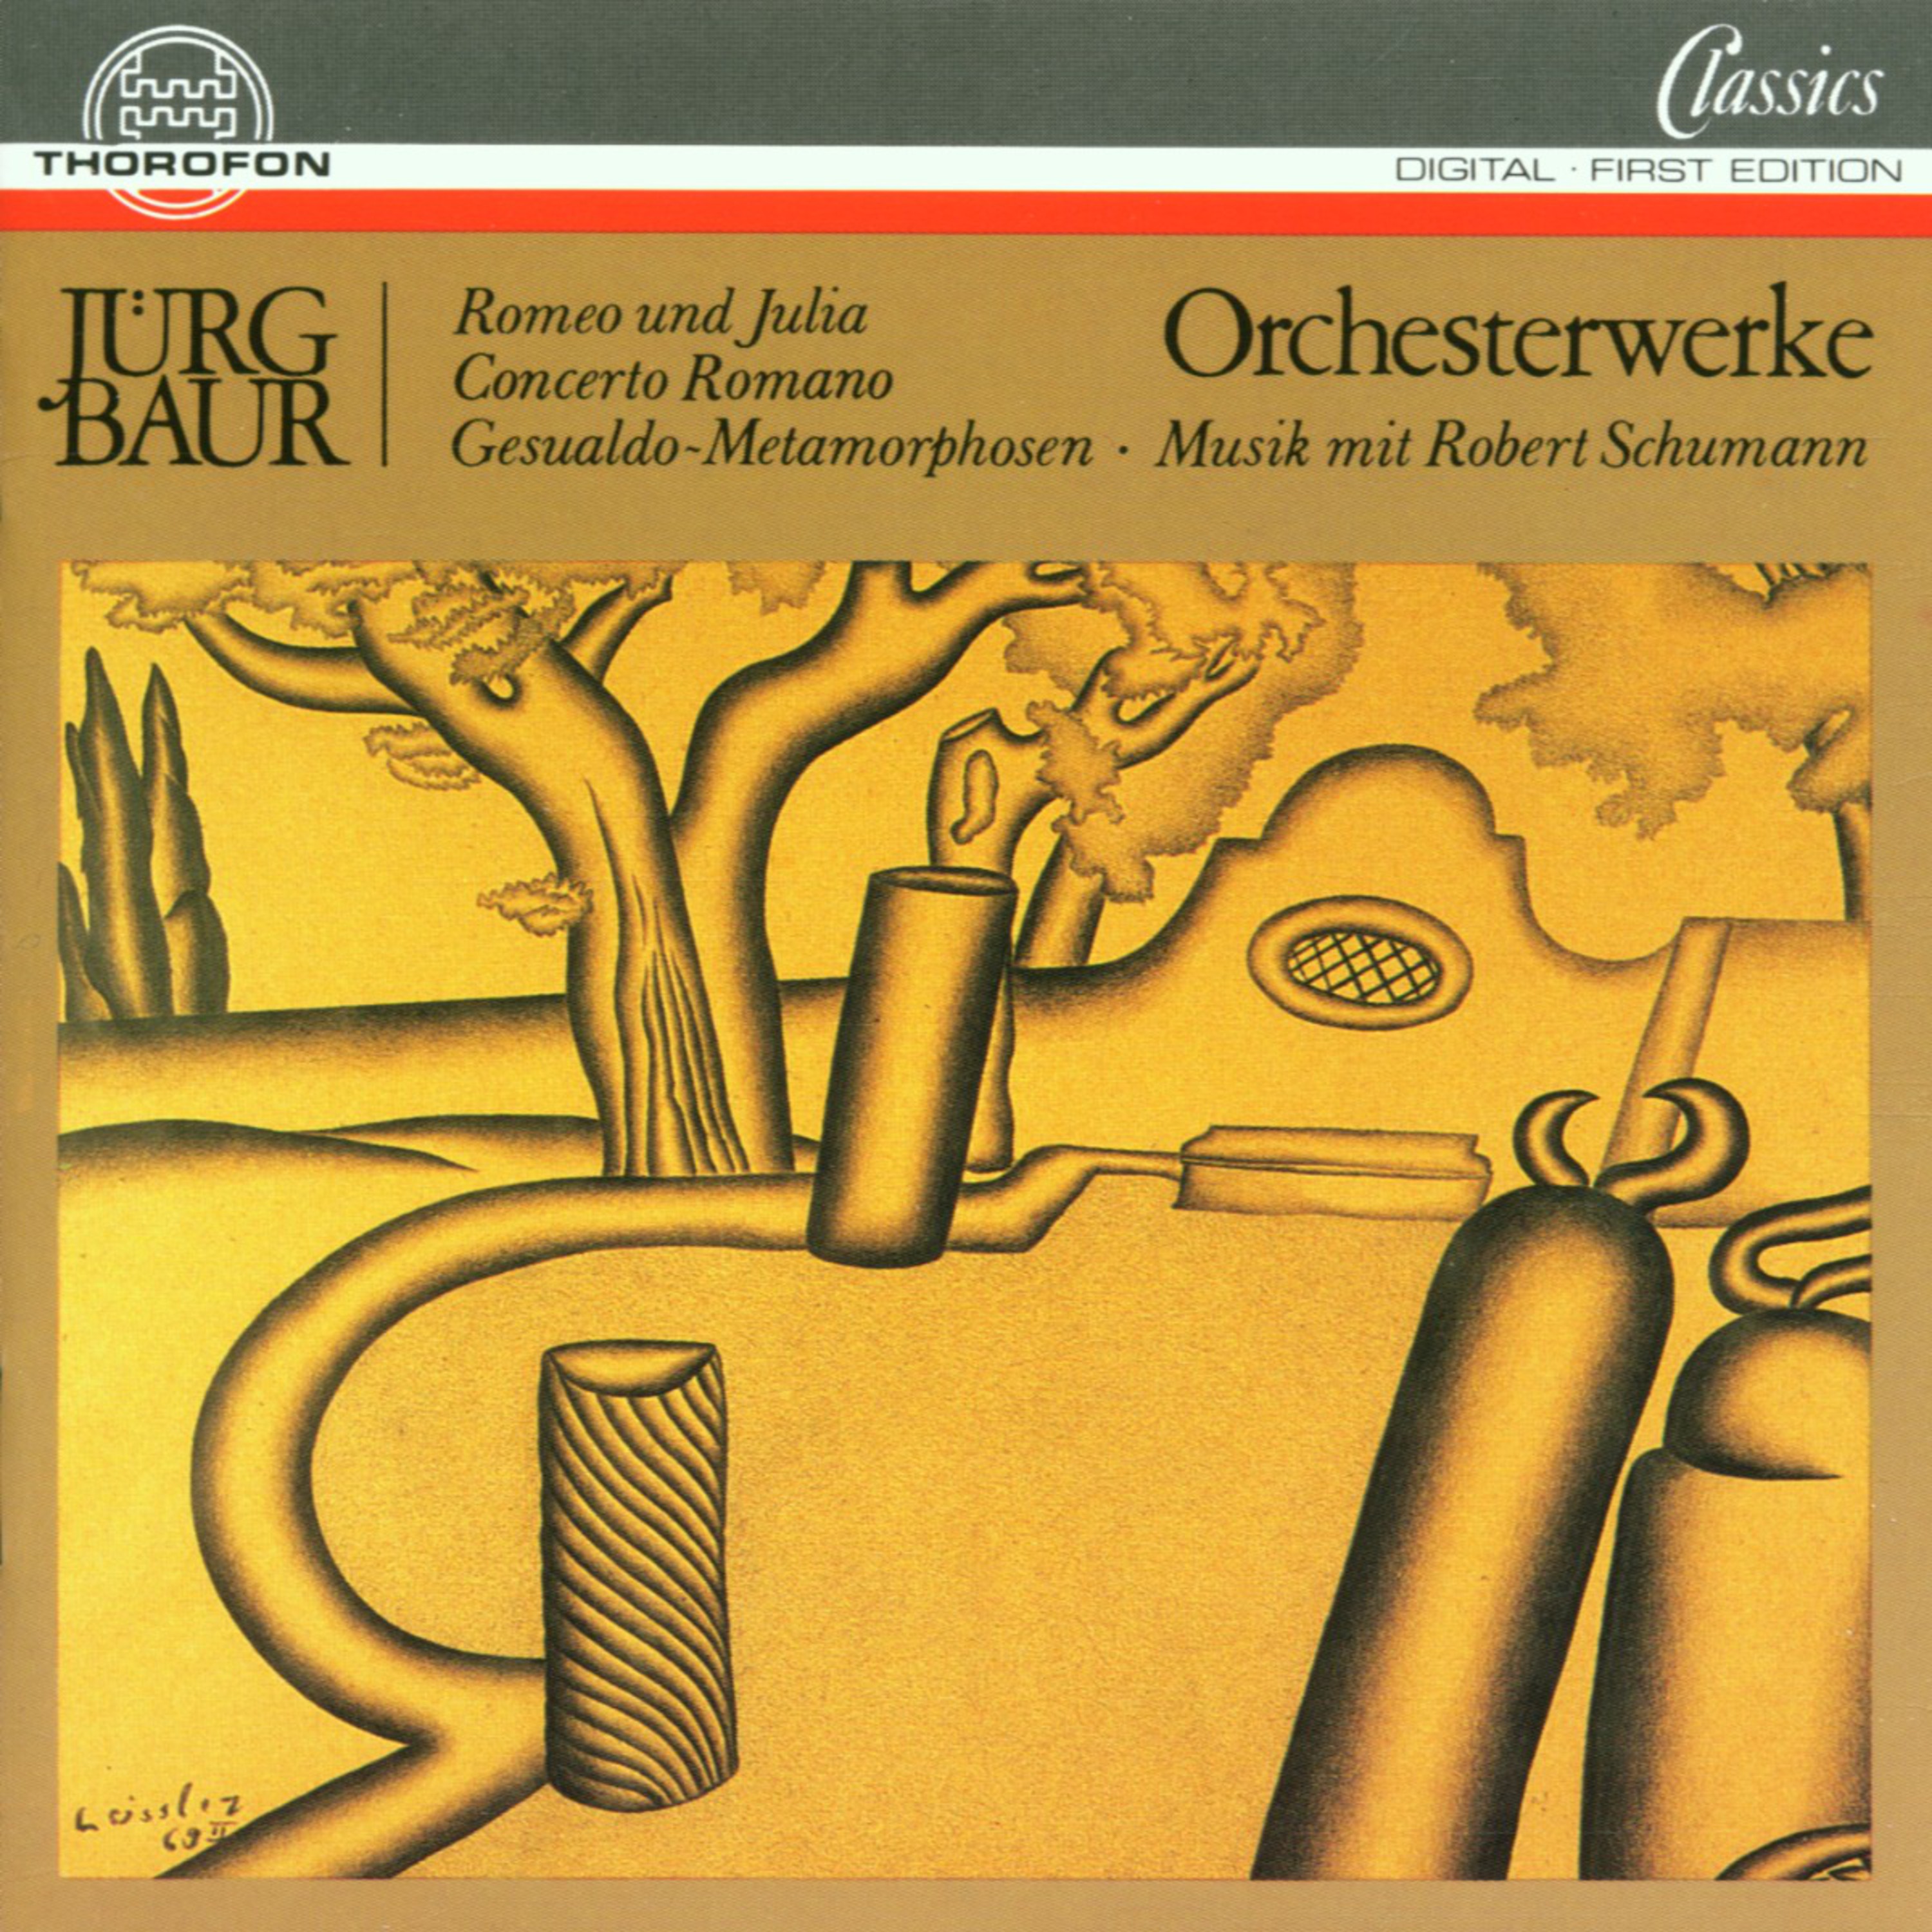 Jü rg Baur: Orchesterwerke